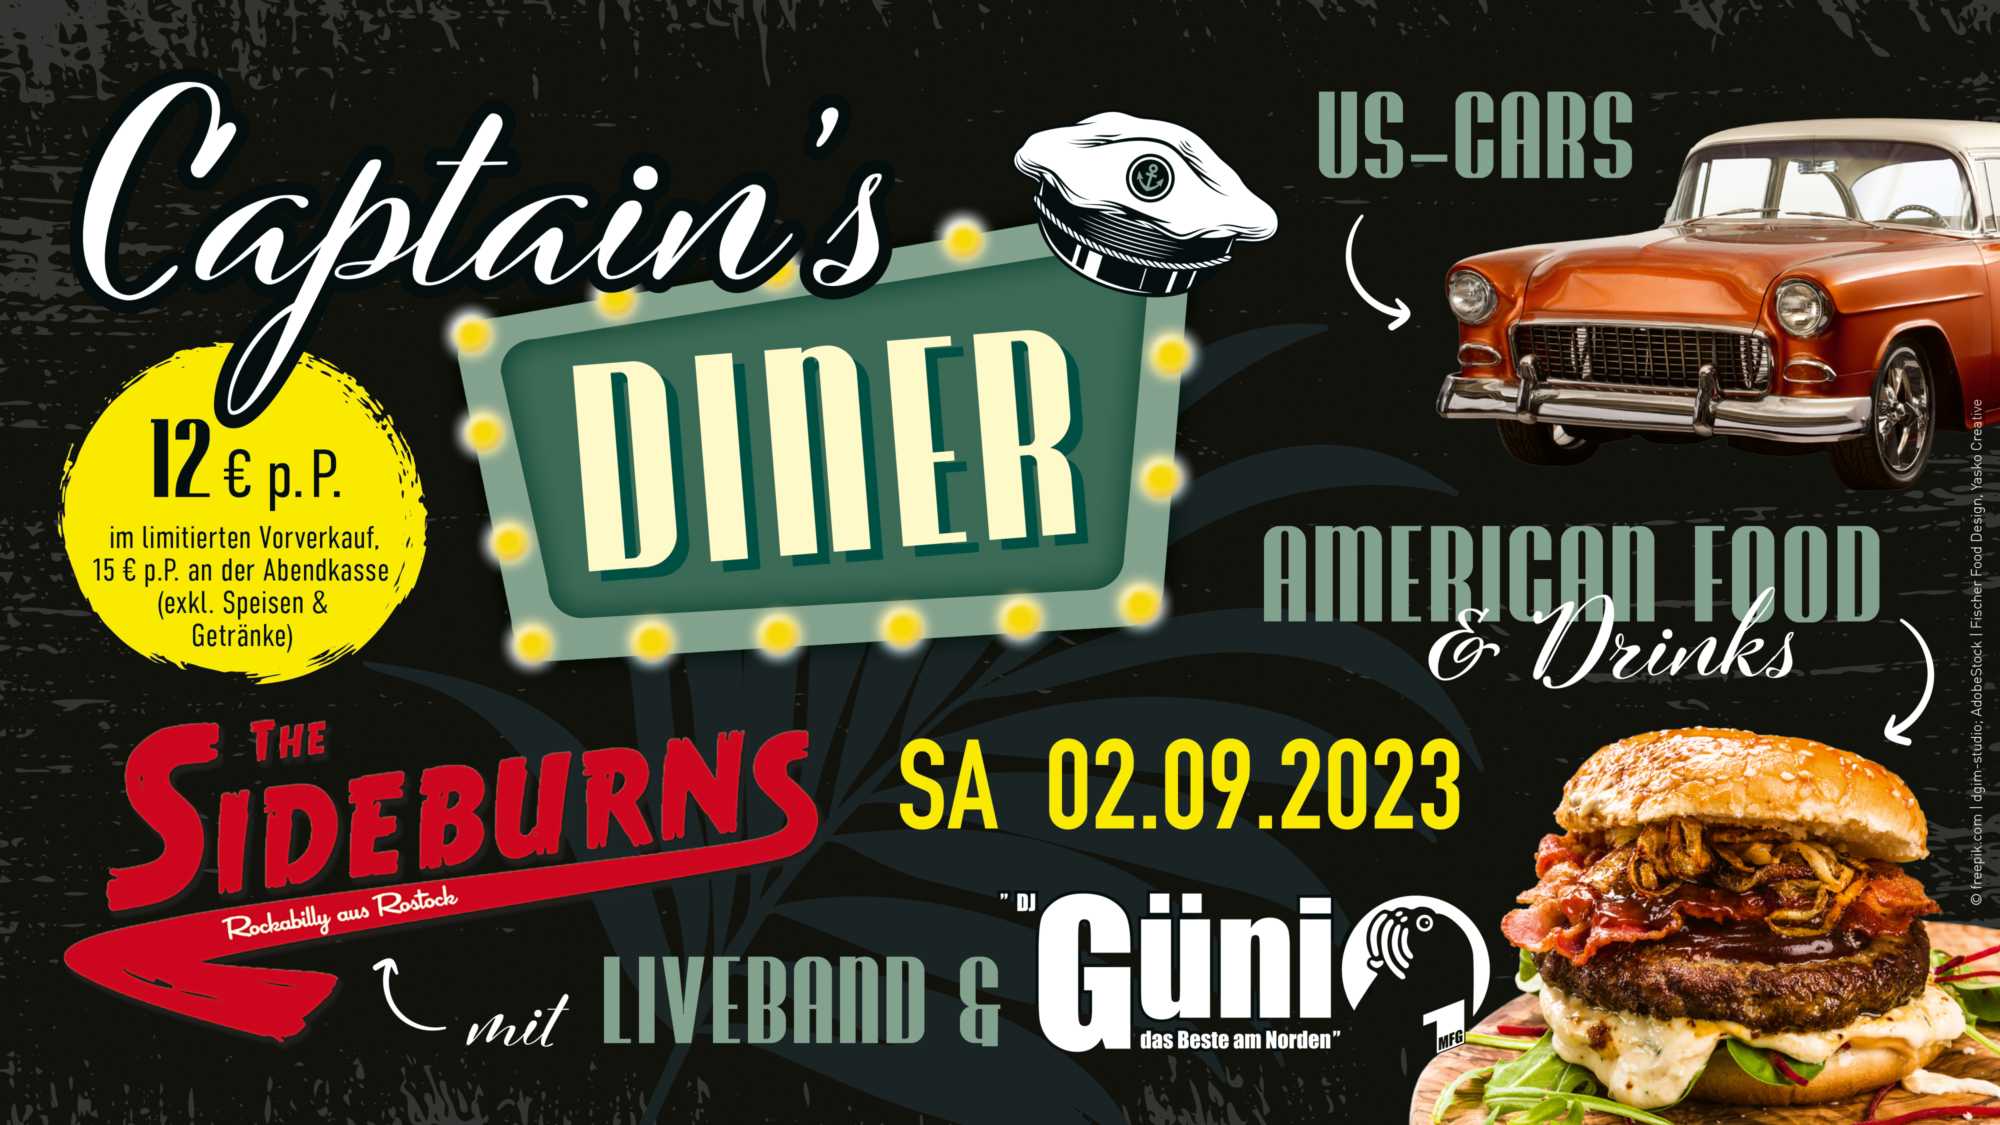 Captain’s Diner – US Cars & Liveband